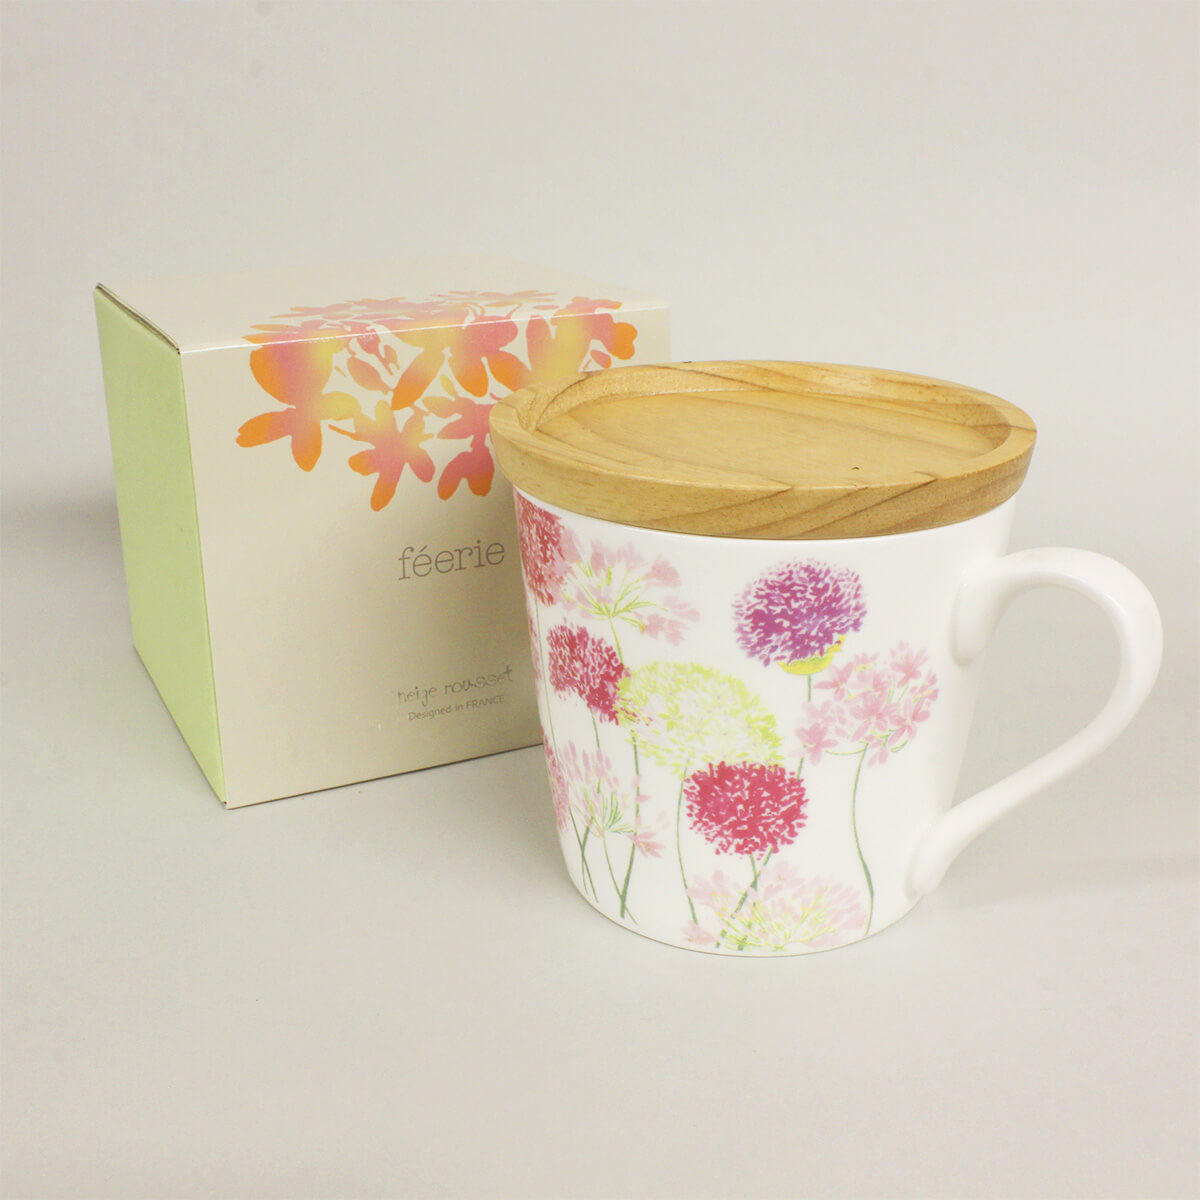 Mug with floral pattern lid